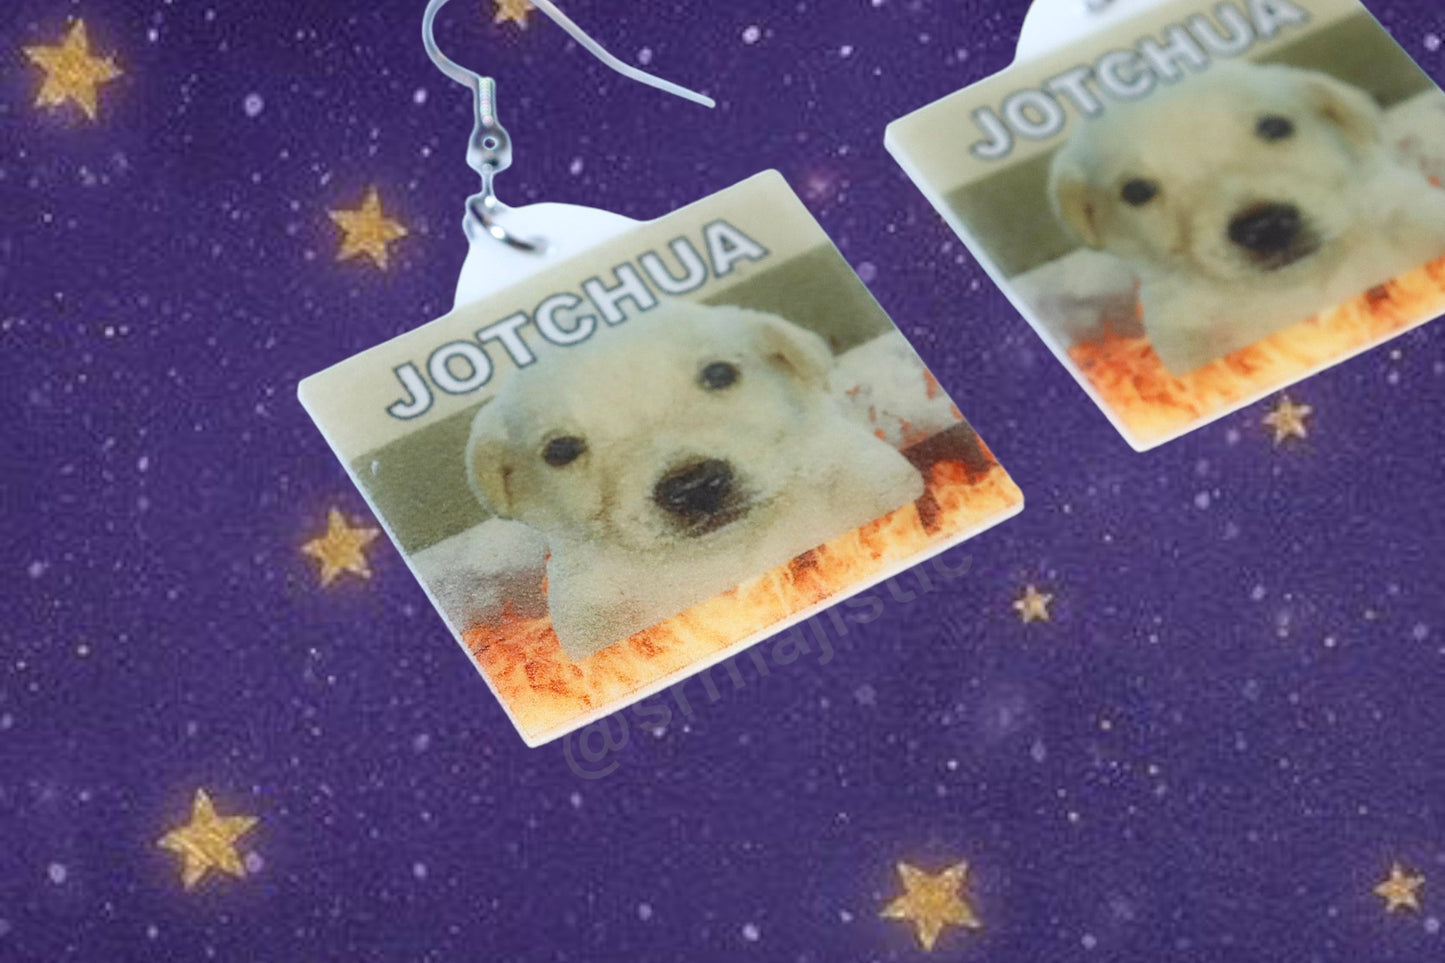 (READY TO SHIP) Jotchua Flag with Flames Funny Handmade Earrings!